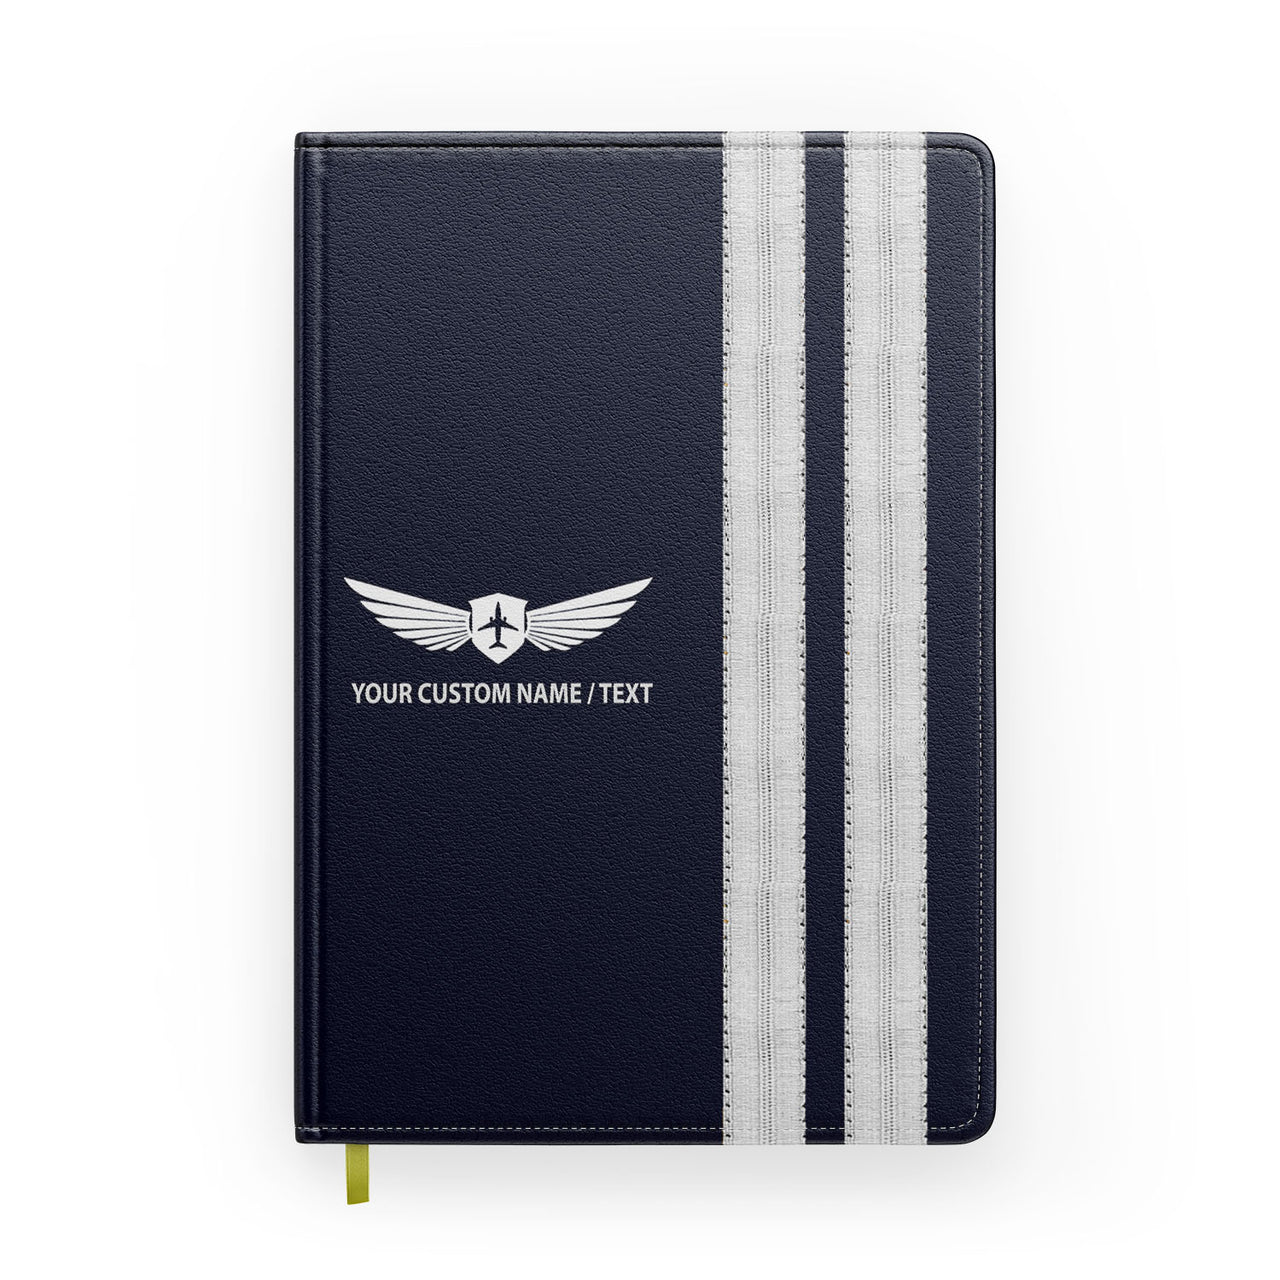 Customizable Name & Special "SILVER" Pilot Epaulettes Designed Notebooks